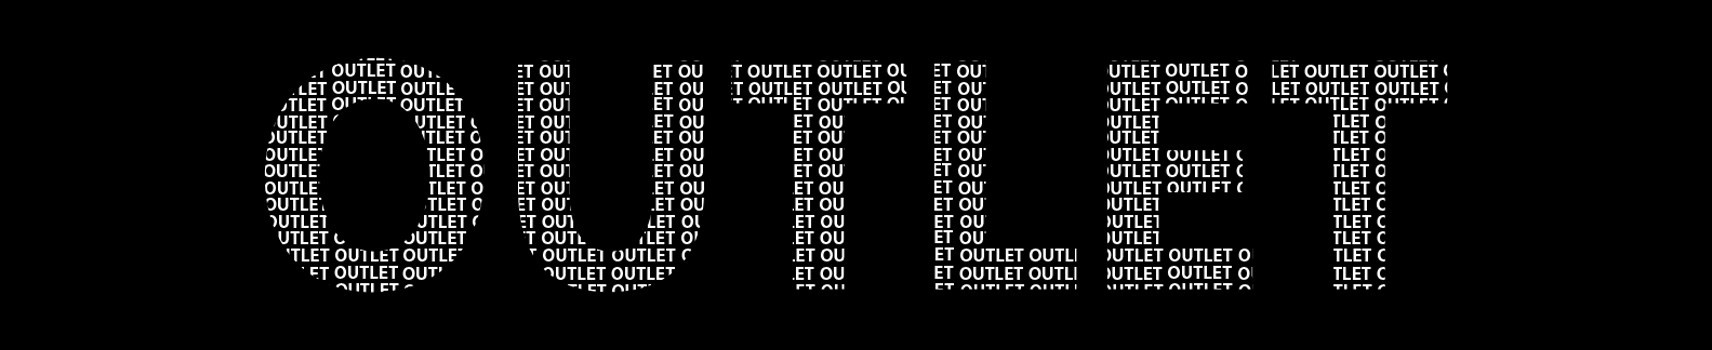 Outlet Rosti France - L'Outlet jusqu'à -30%